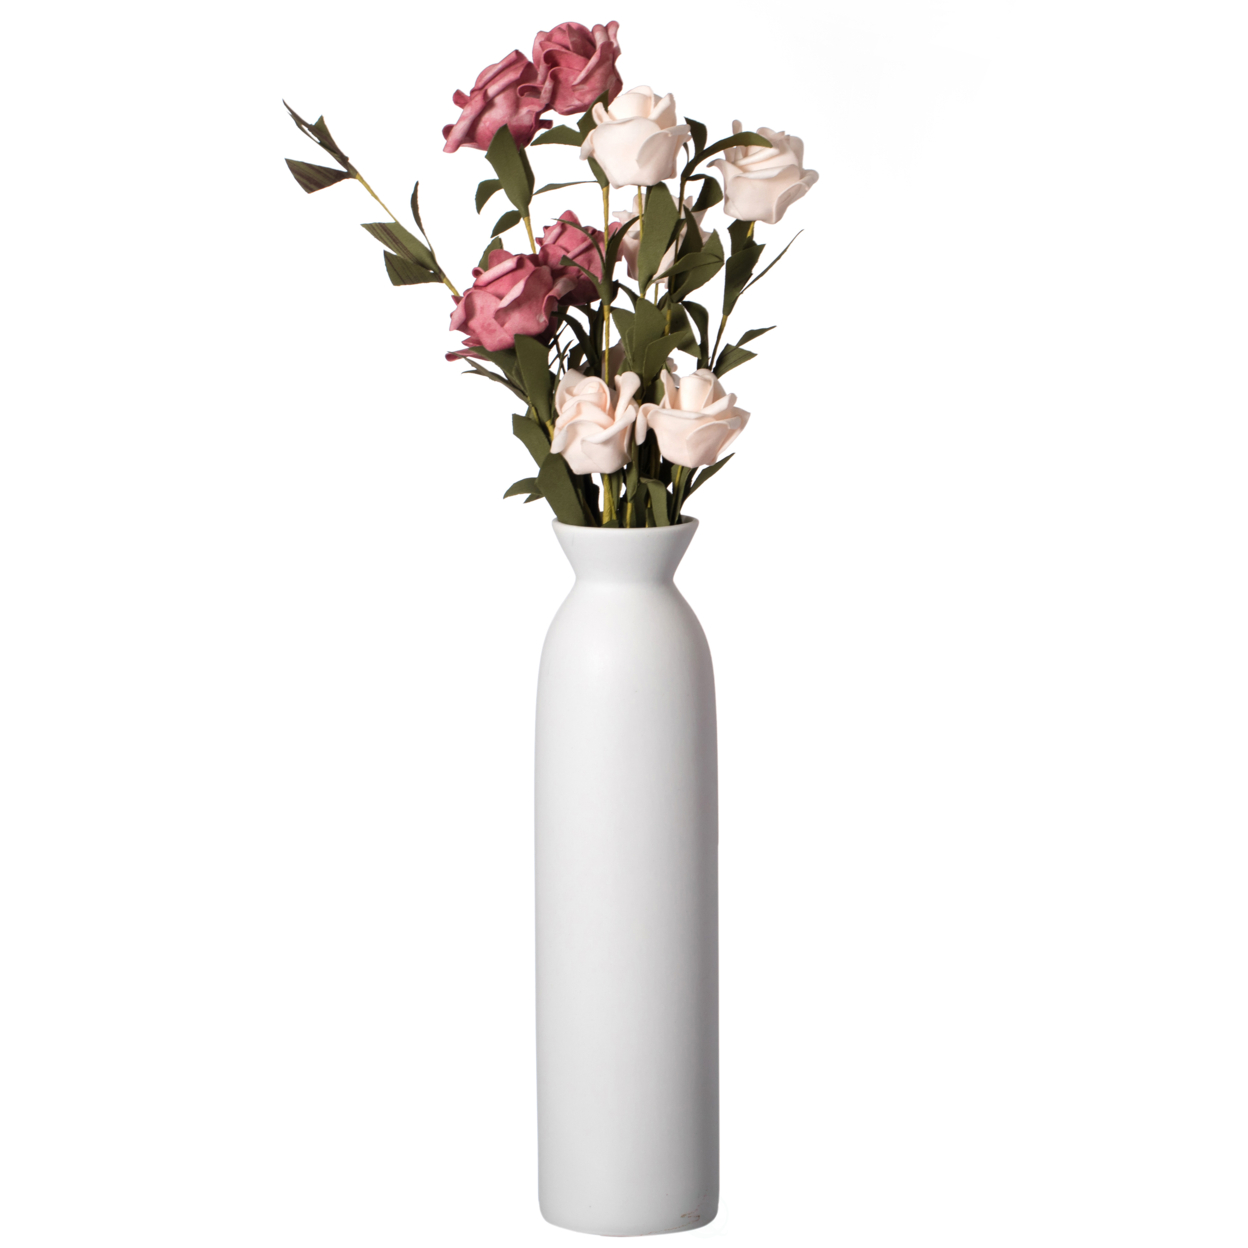 Contemporary White Cylinder Shaped Ceramic Table Flower Vase Holder - Large